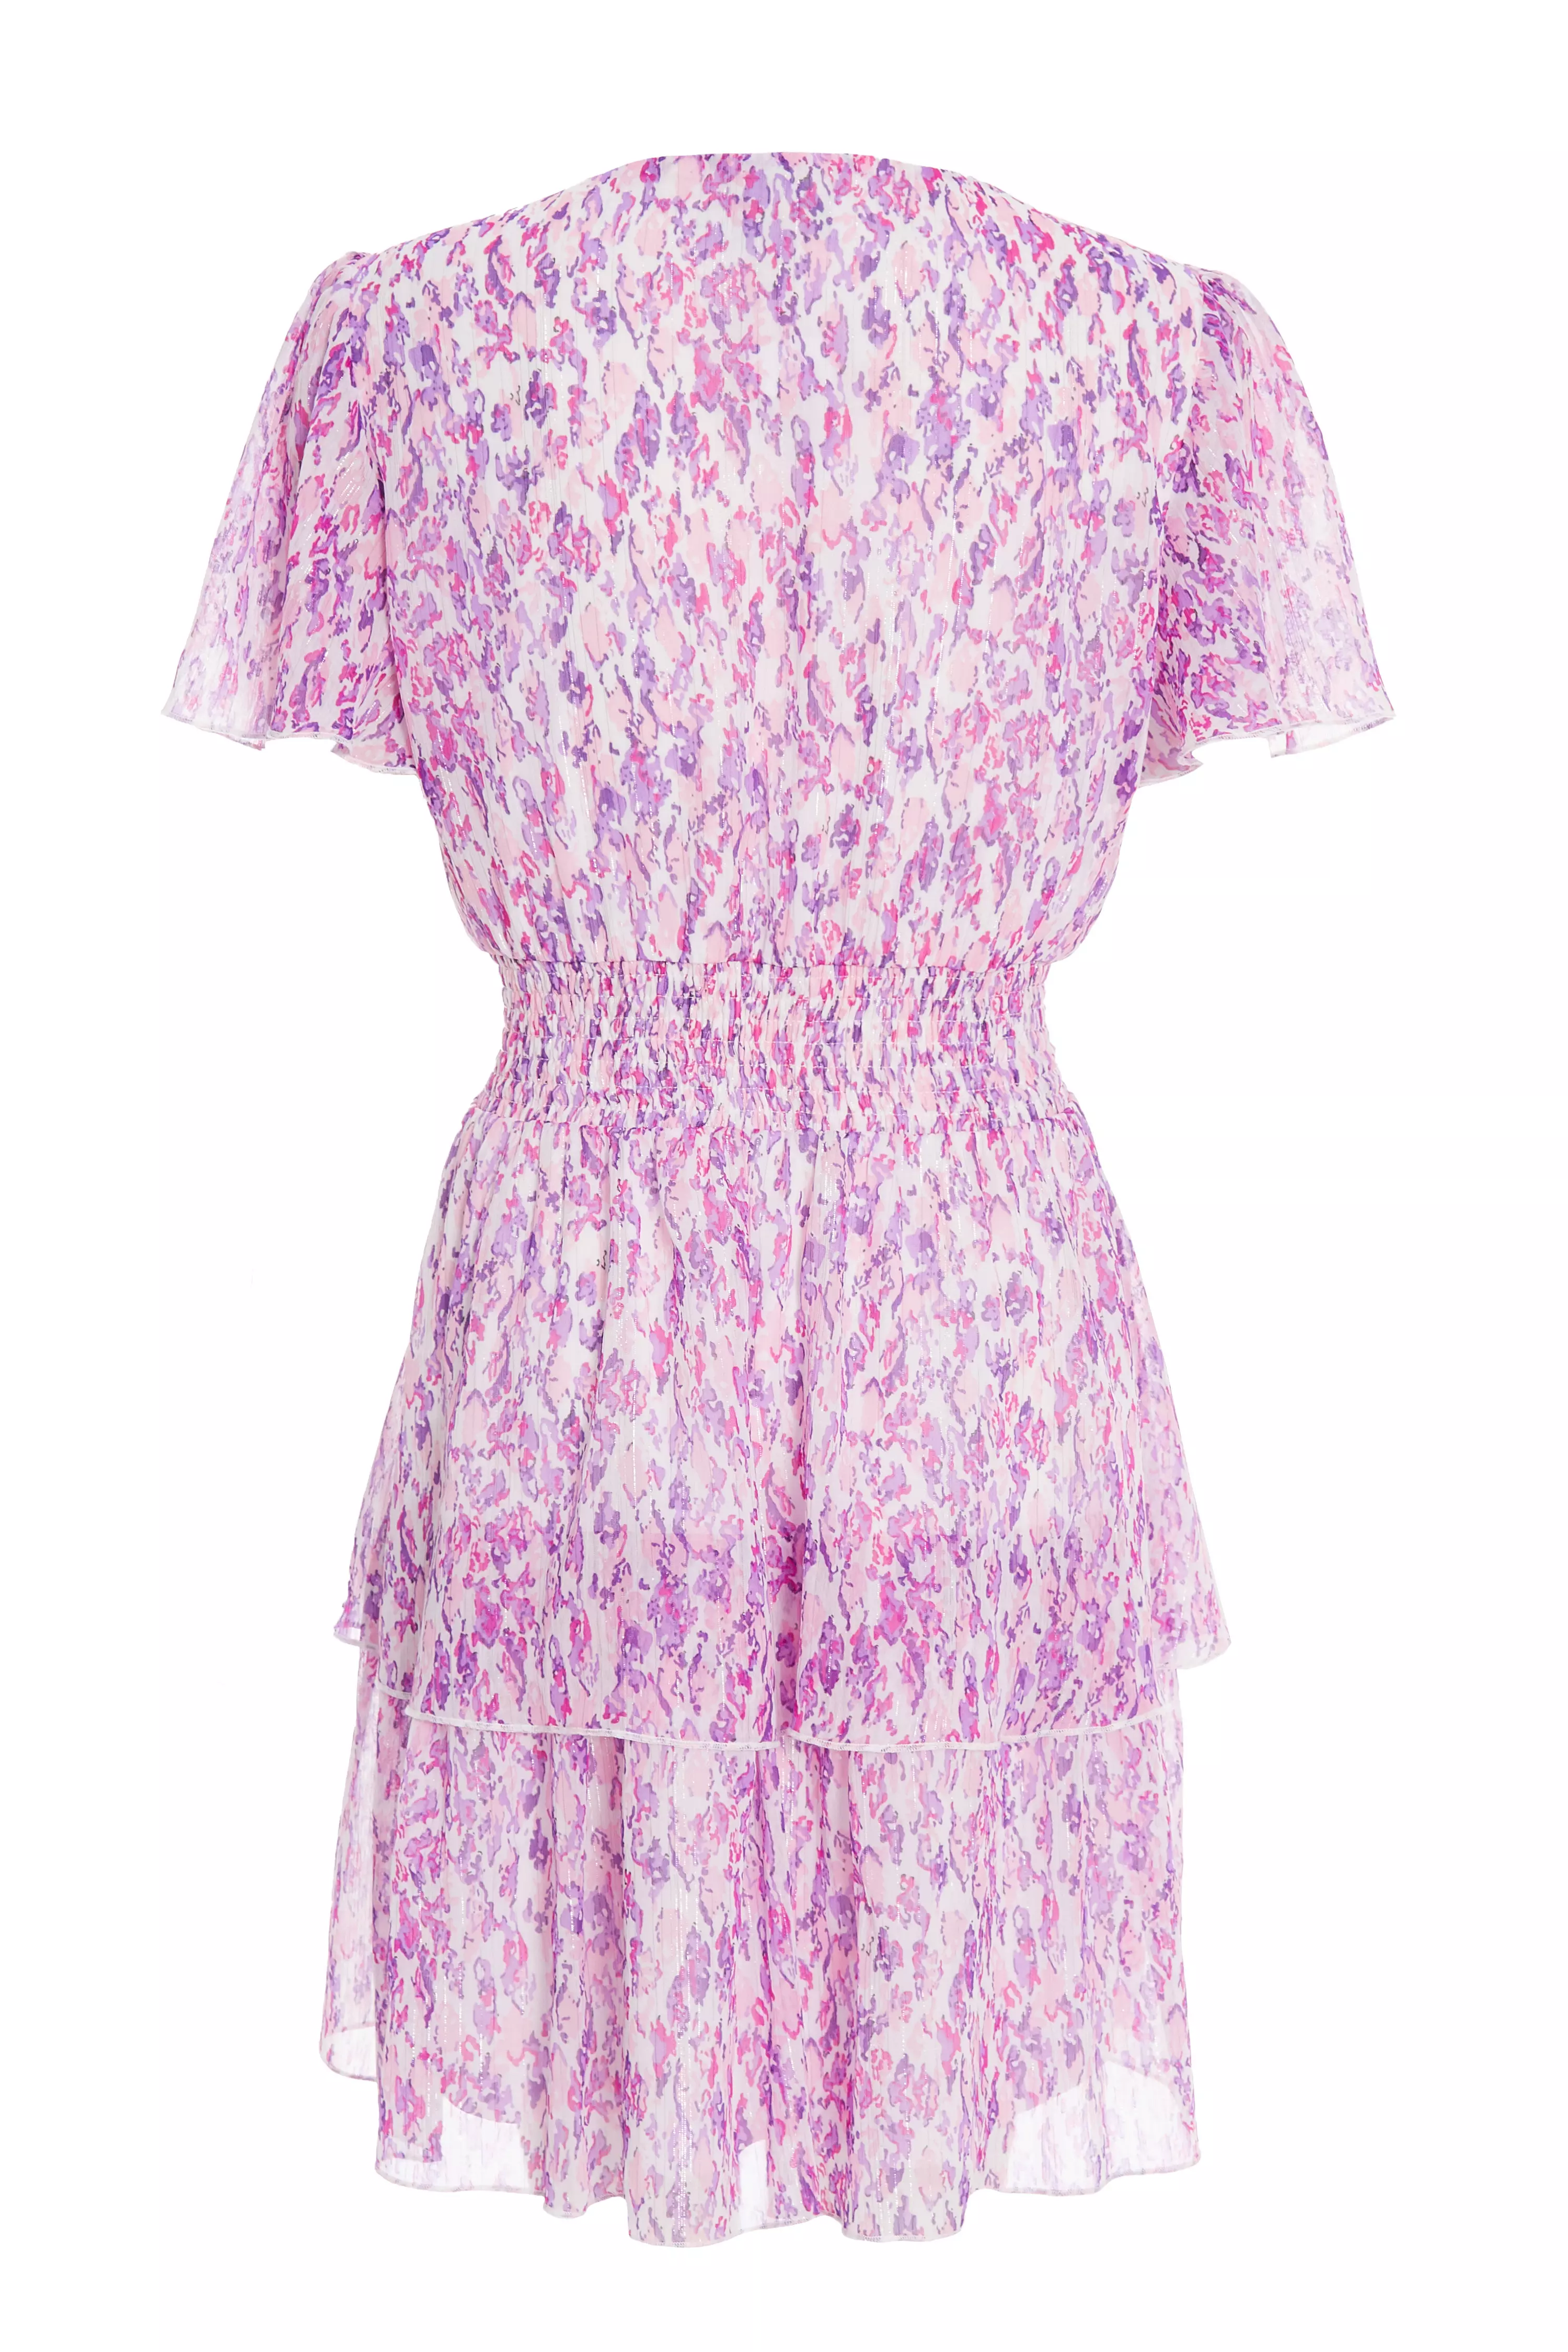 Lilac Chiffon Animal Print Mini Dress - QUIZ Clothing